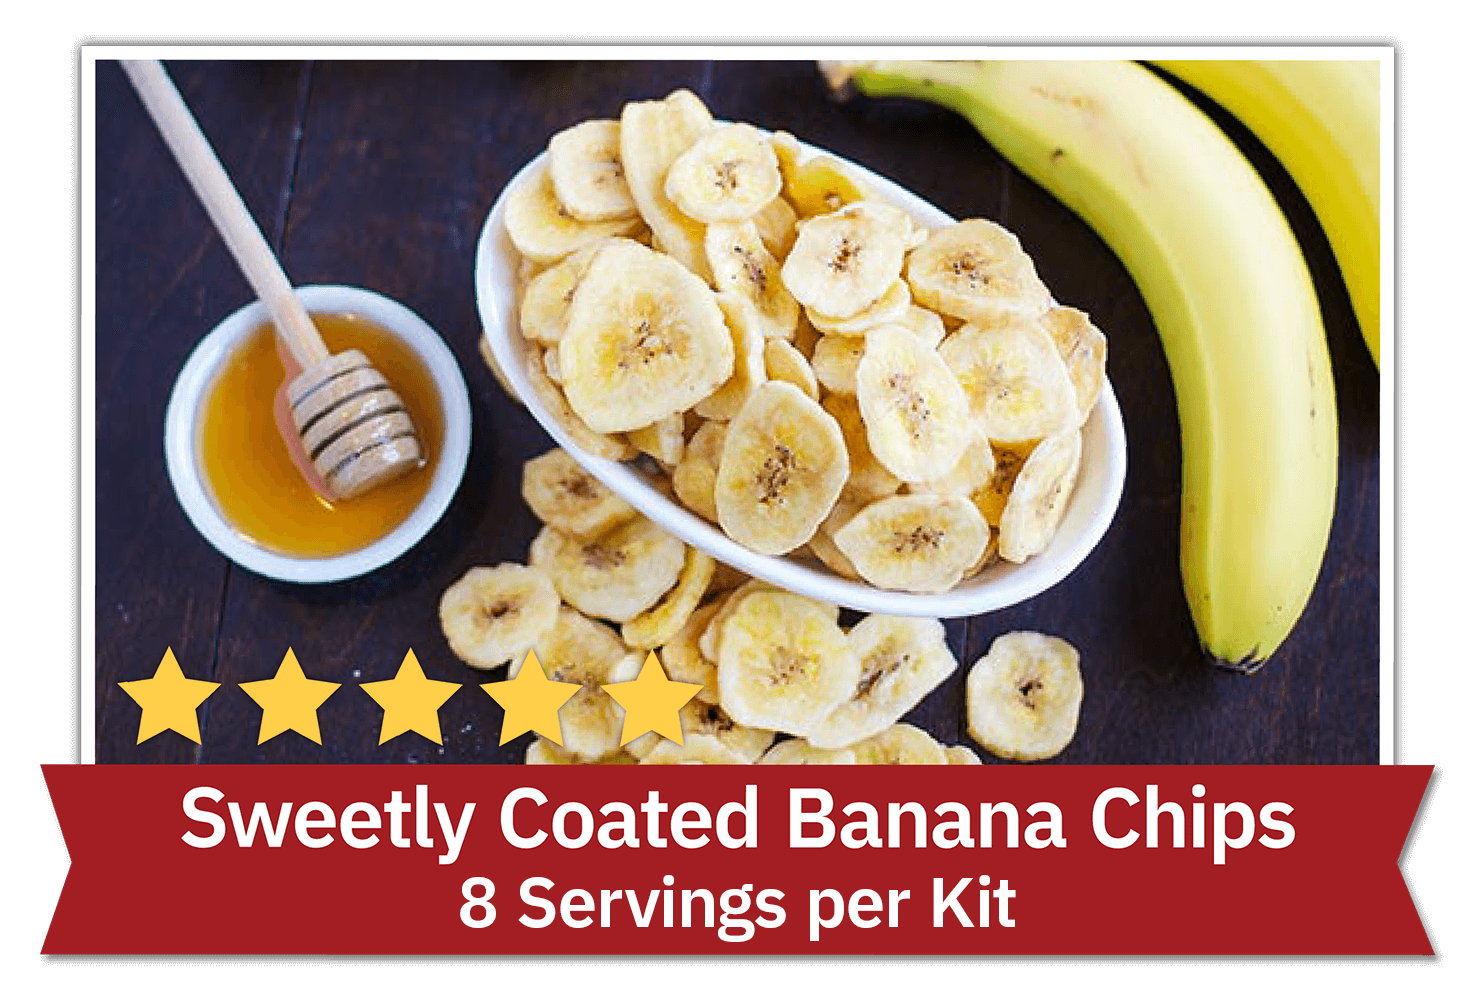 Sweetly Coated Banana Chips - 8 Servings